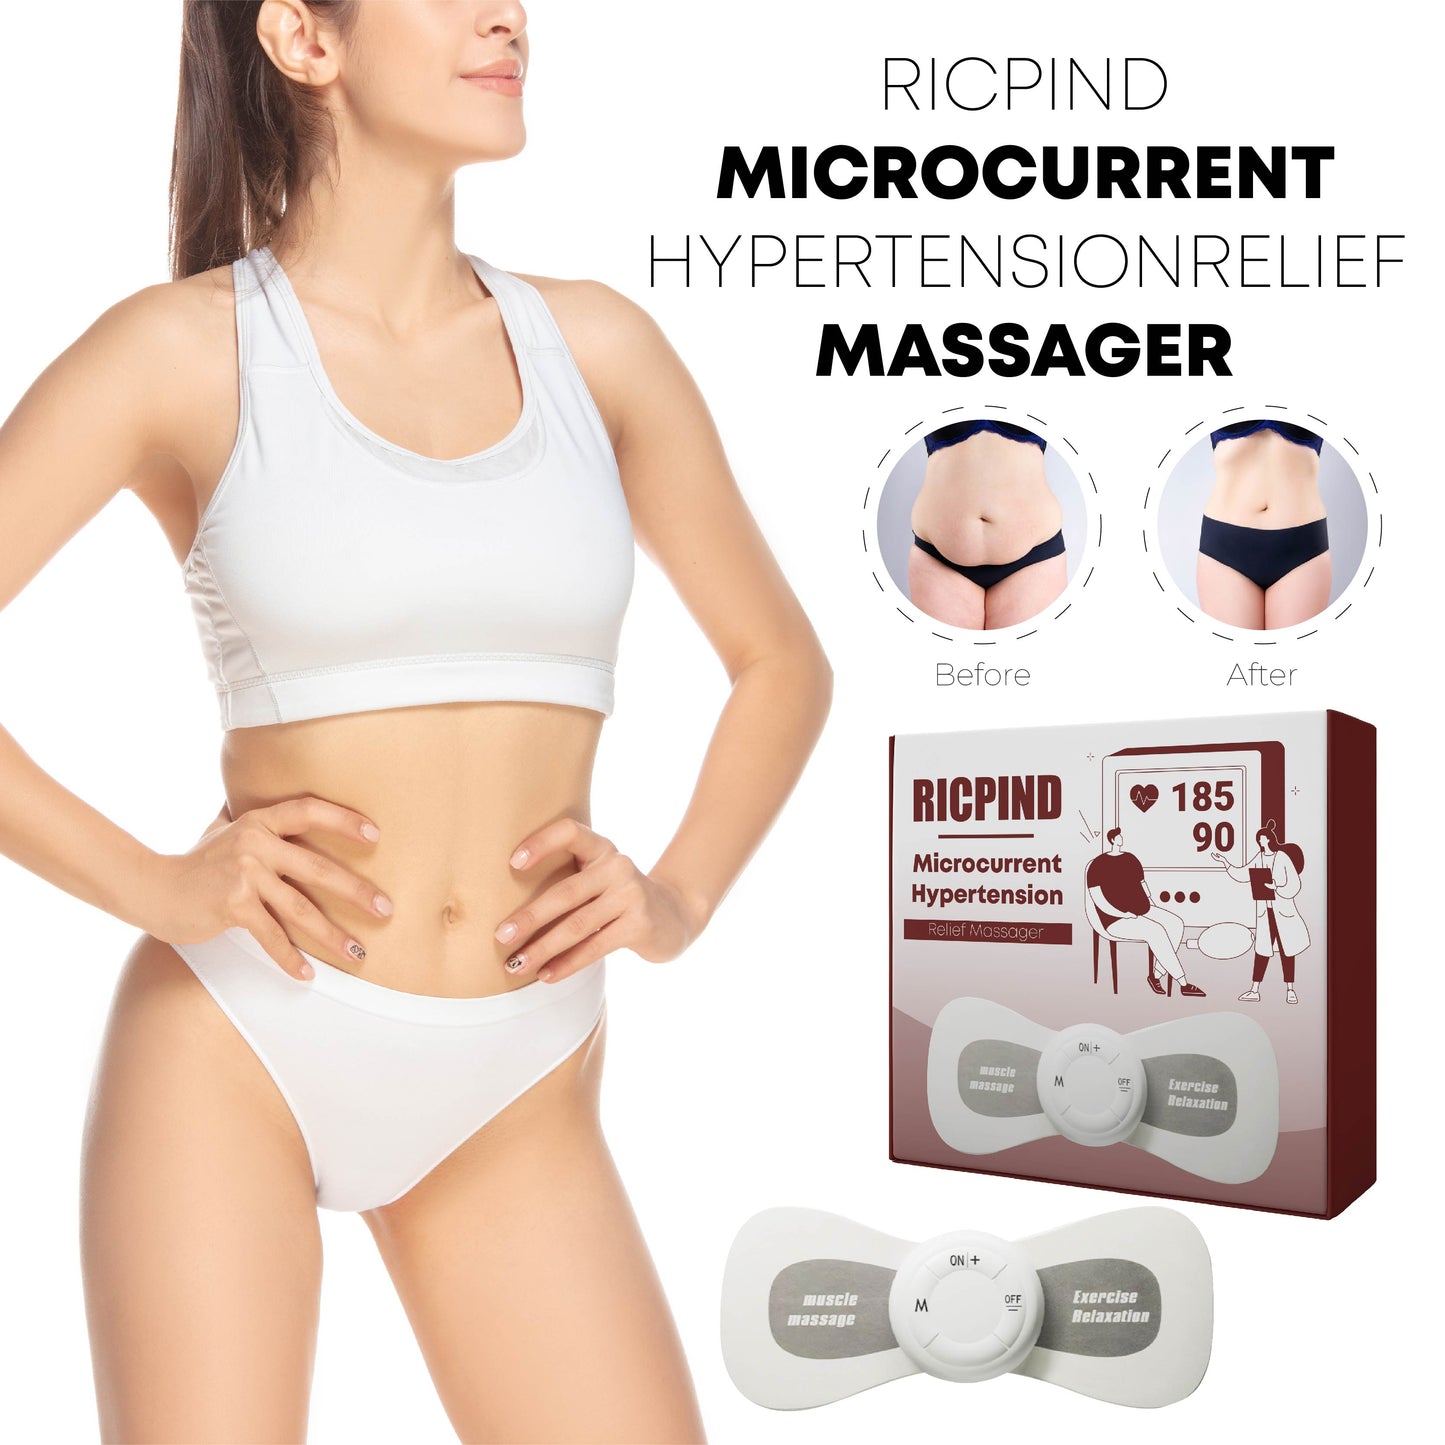 Ricpind Microcurrent HypertensionRelief Massager